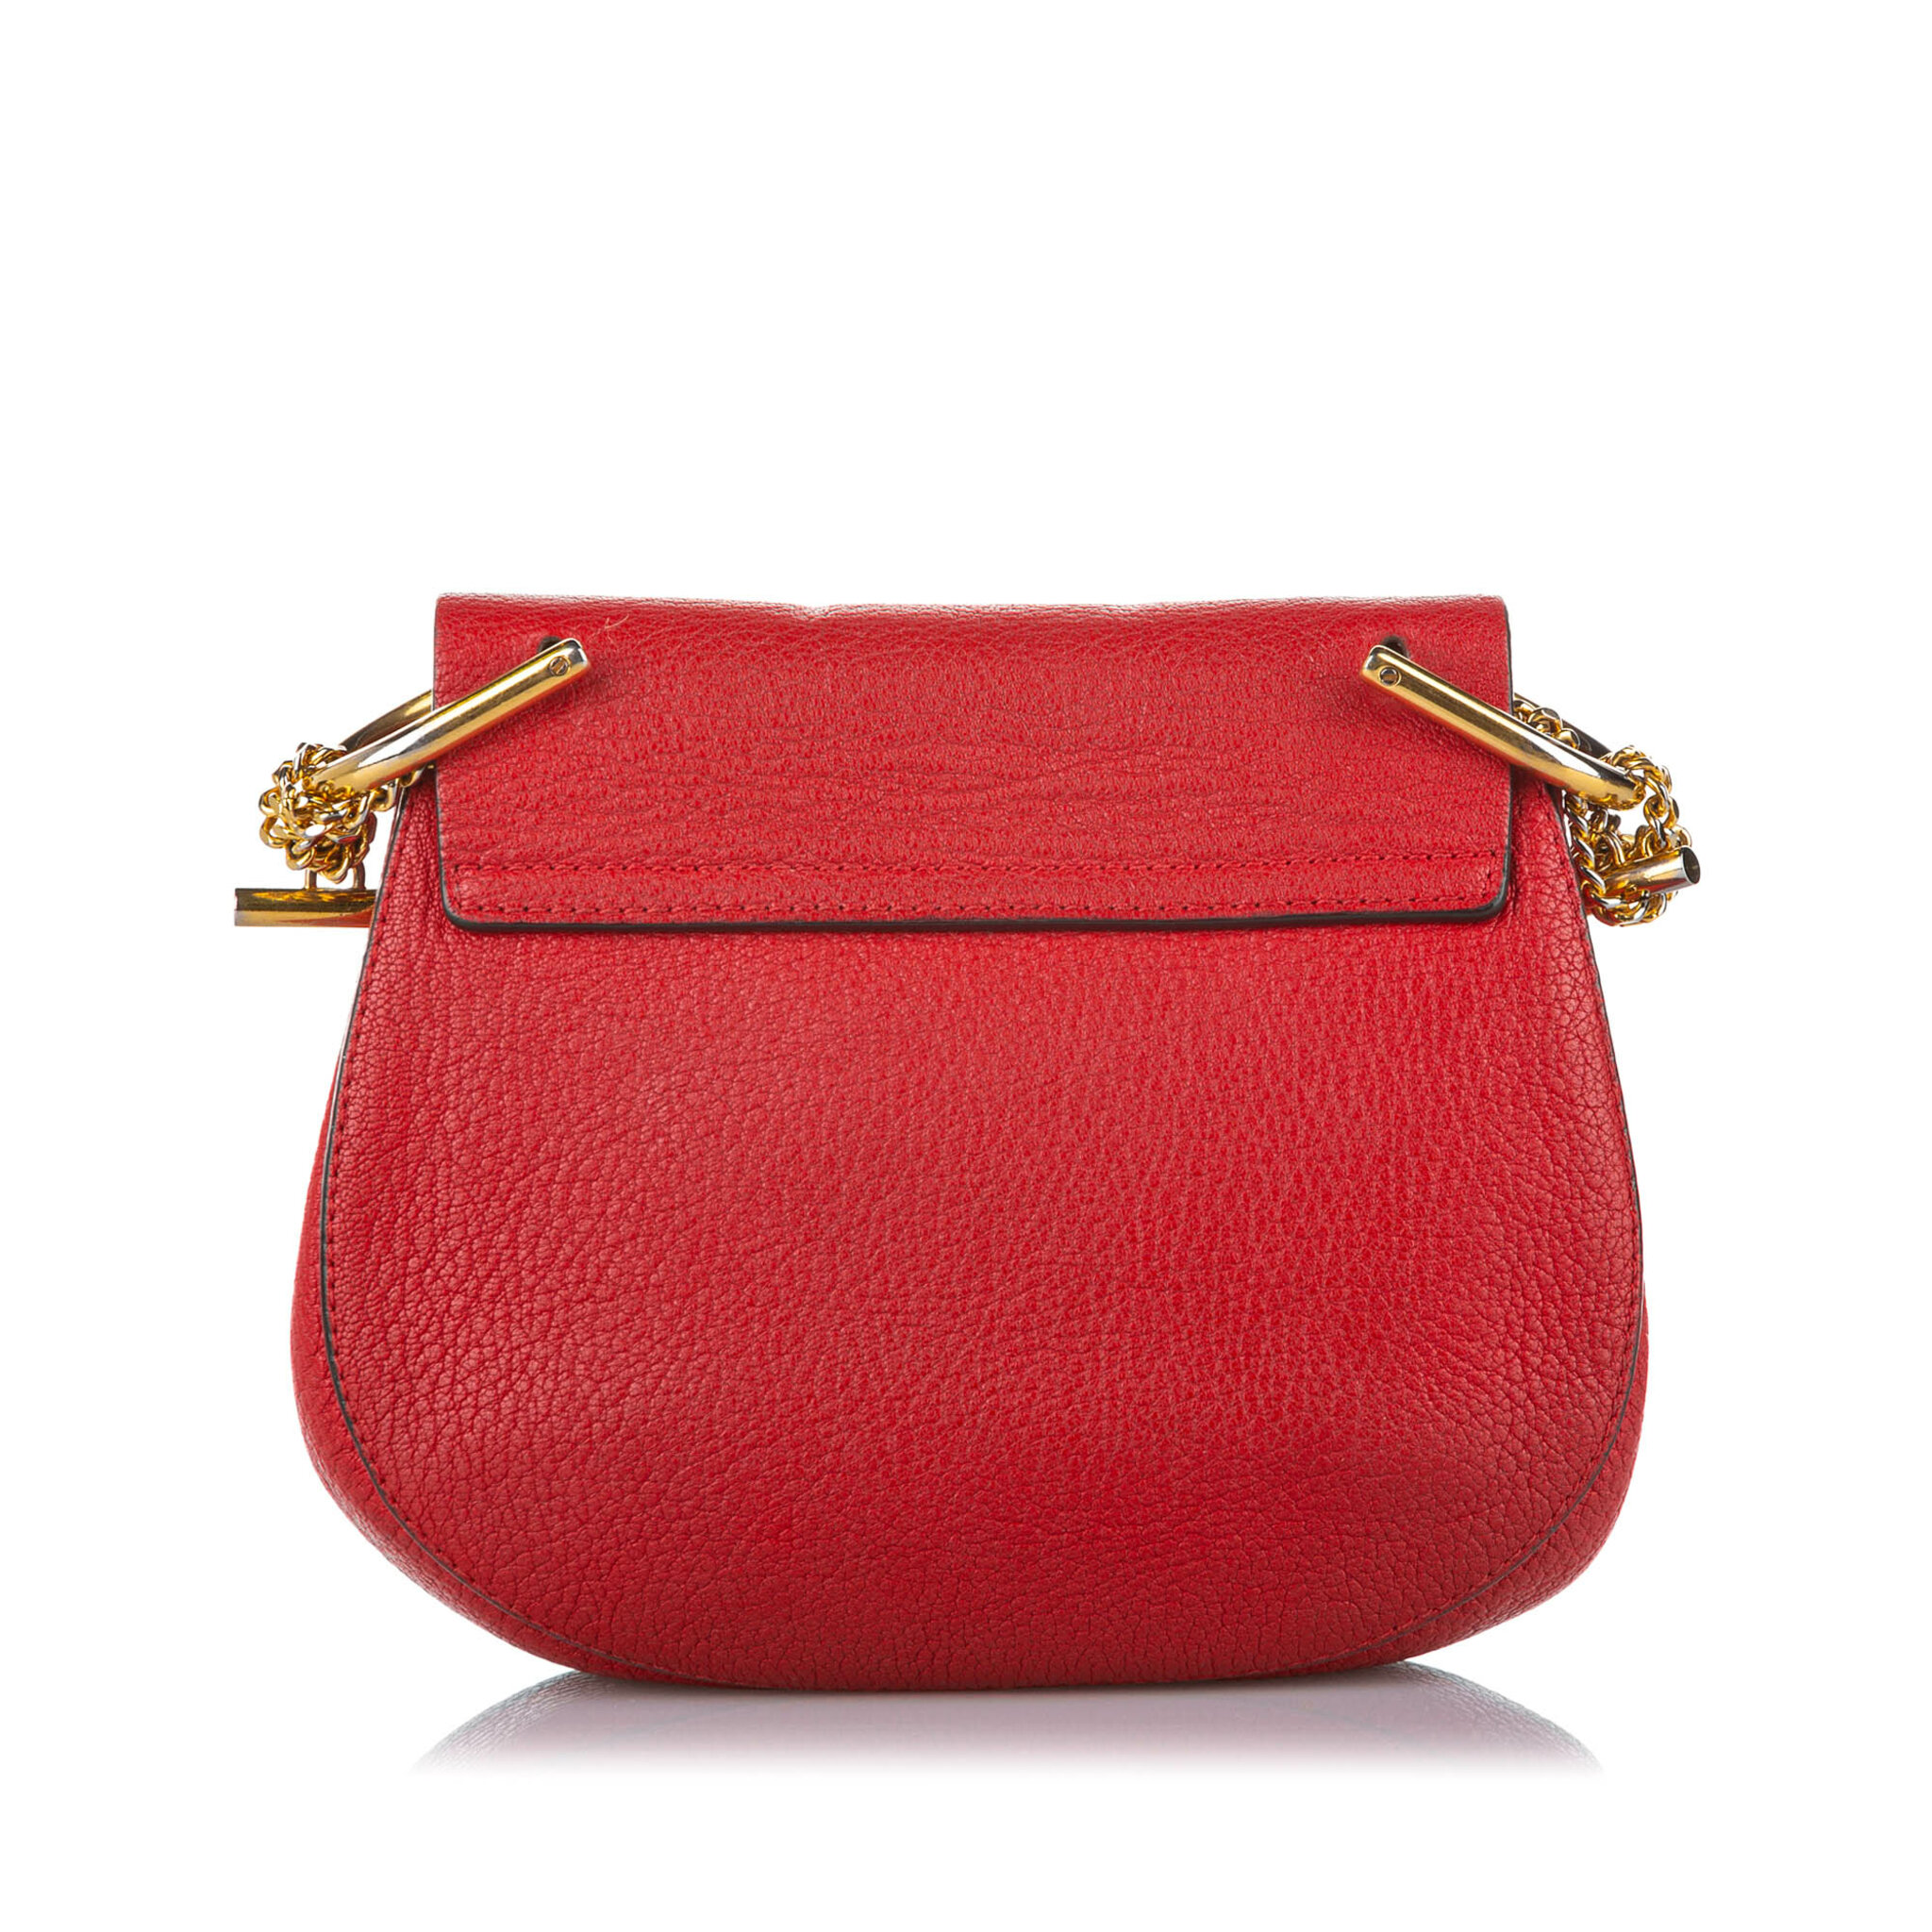 Chloe Drew Leather Crossbody Bag, red